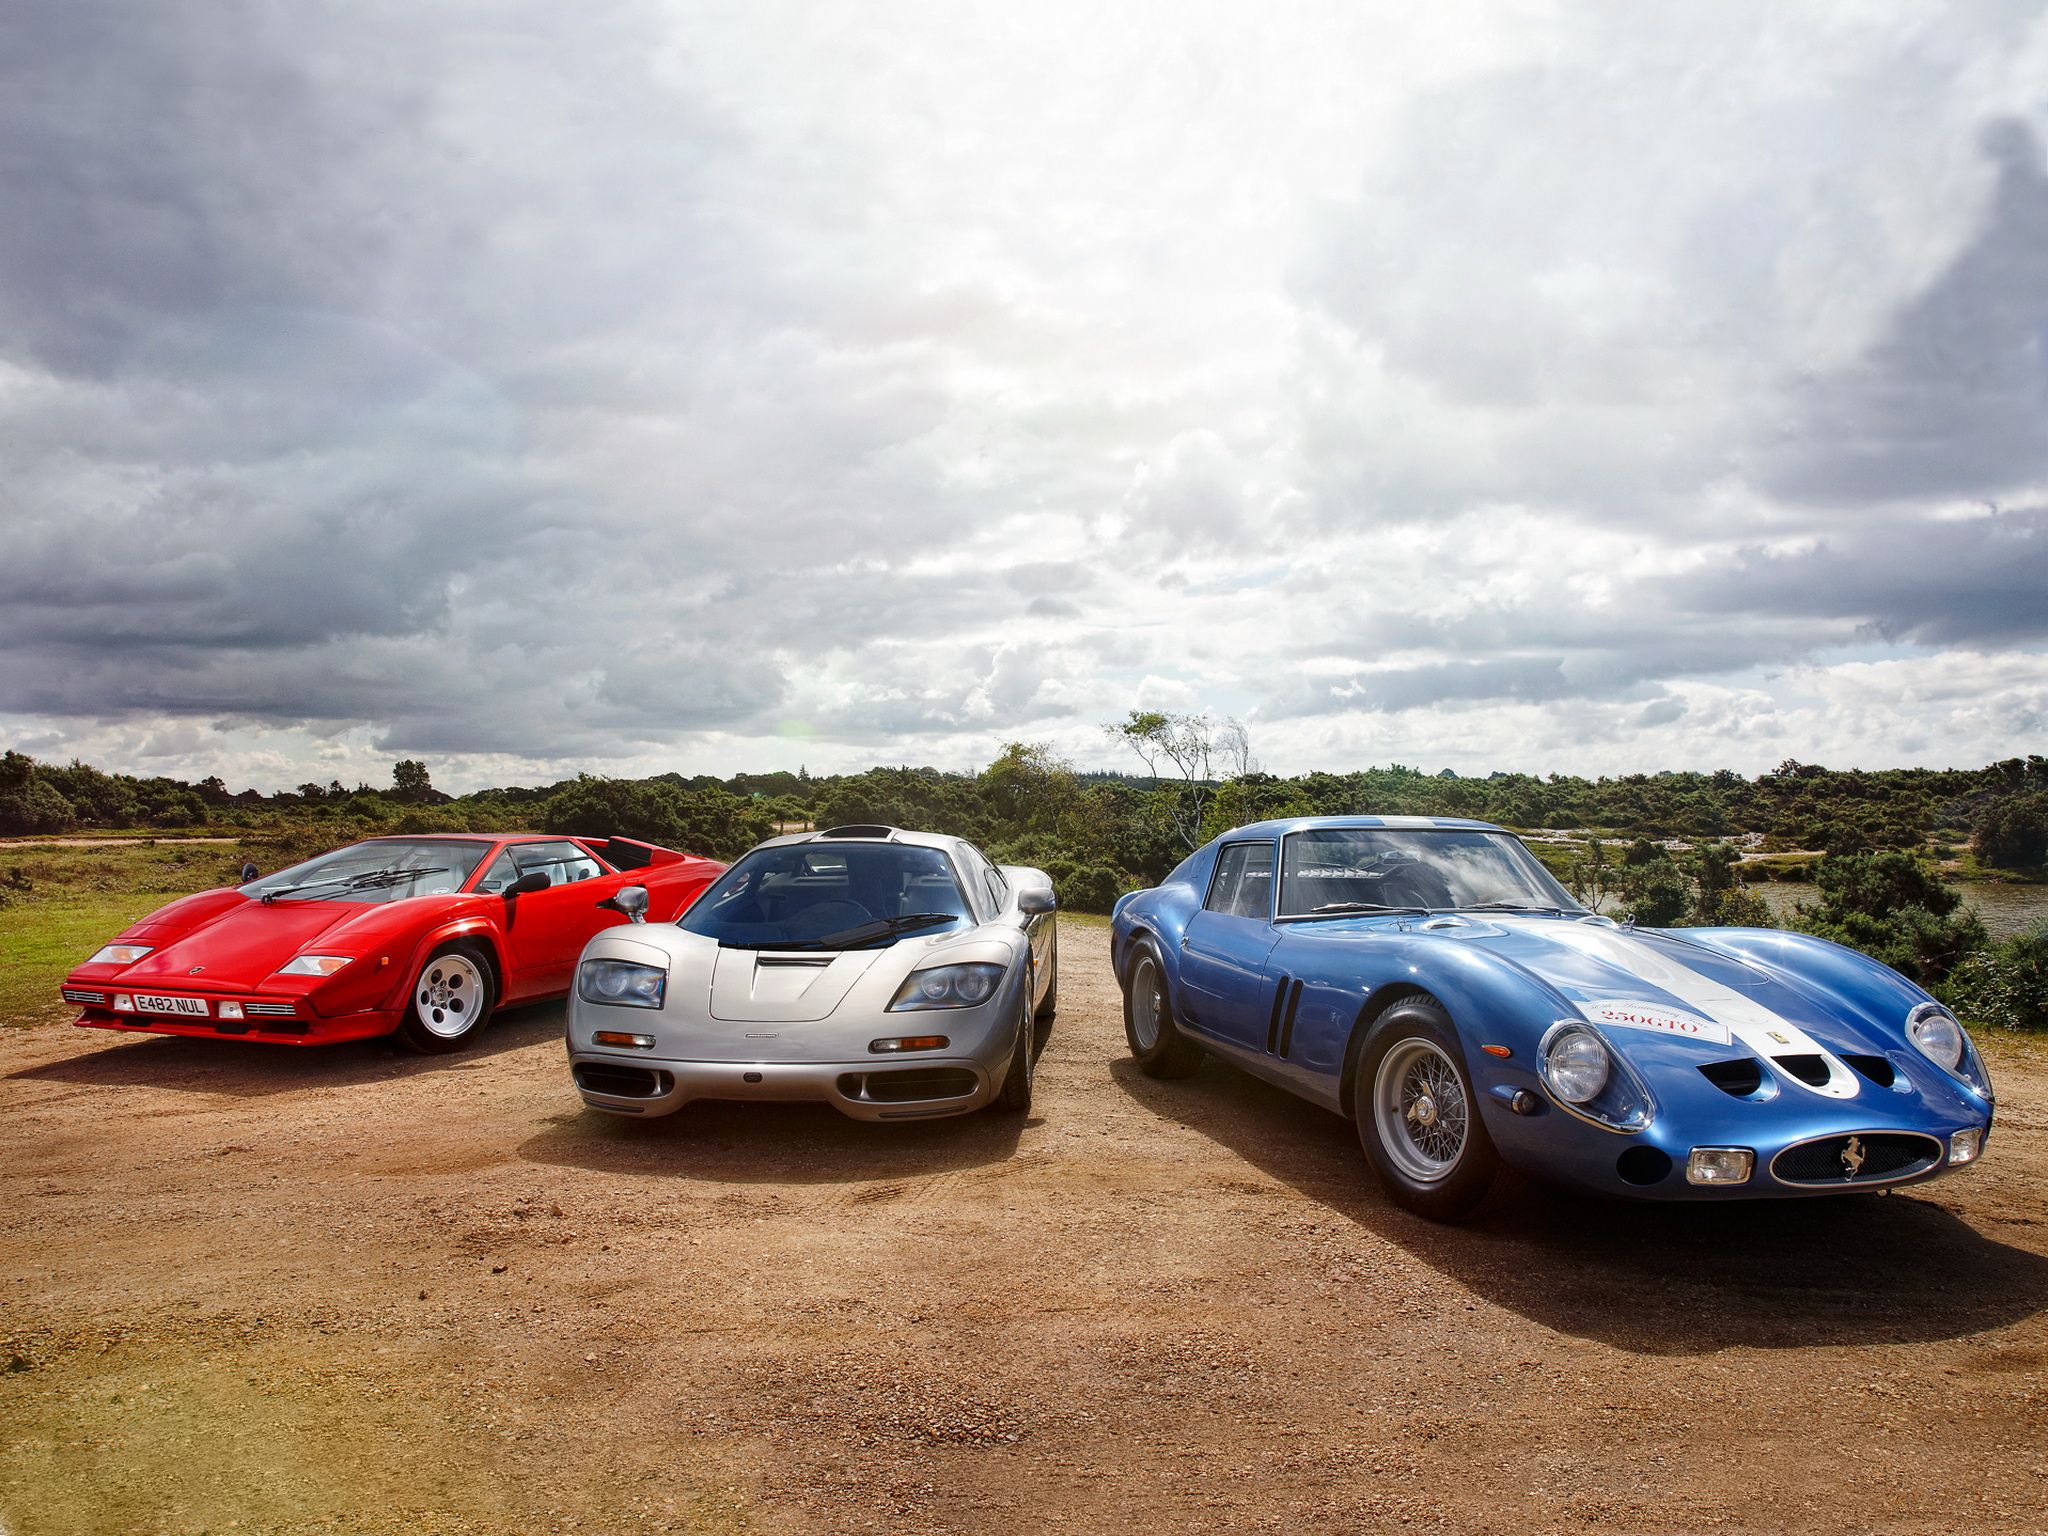 mclaren, Lamborghini, Ferrari, Supercar Wallpaper HD / Desktop and Mobile Background